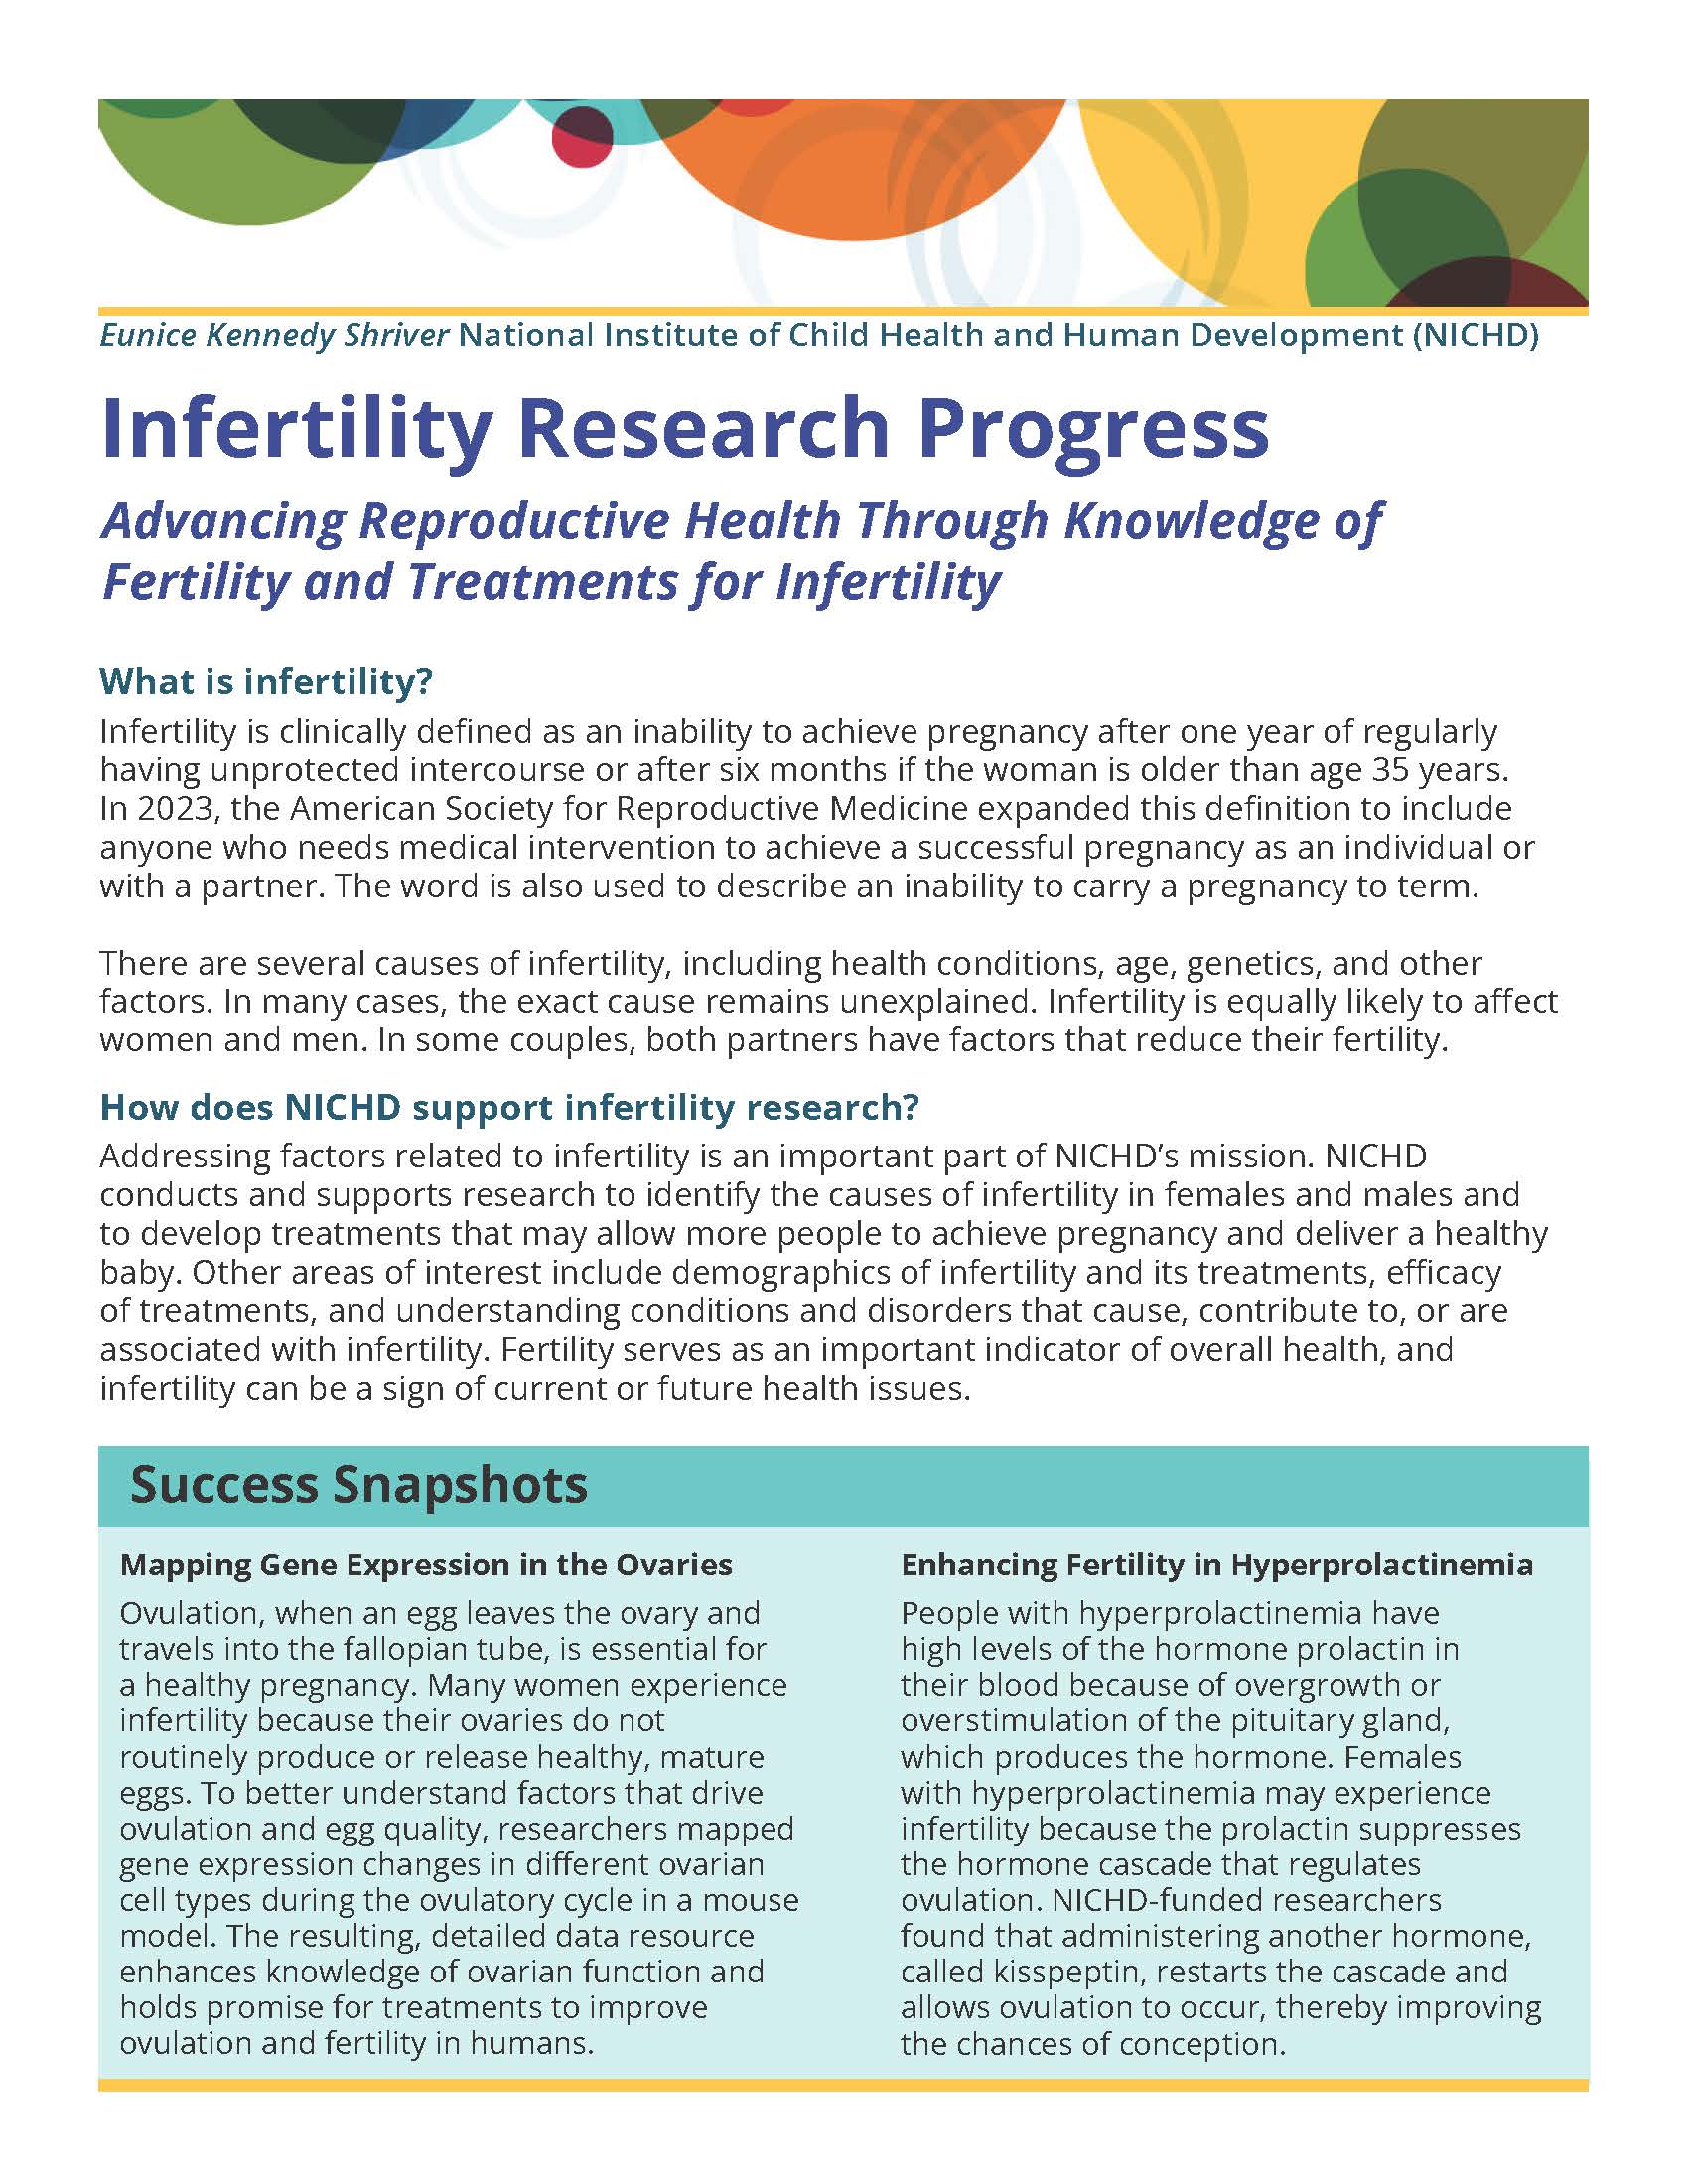 Front side of the NICHD Infertility Research Progress Fact Sheet